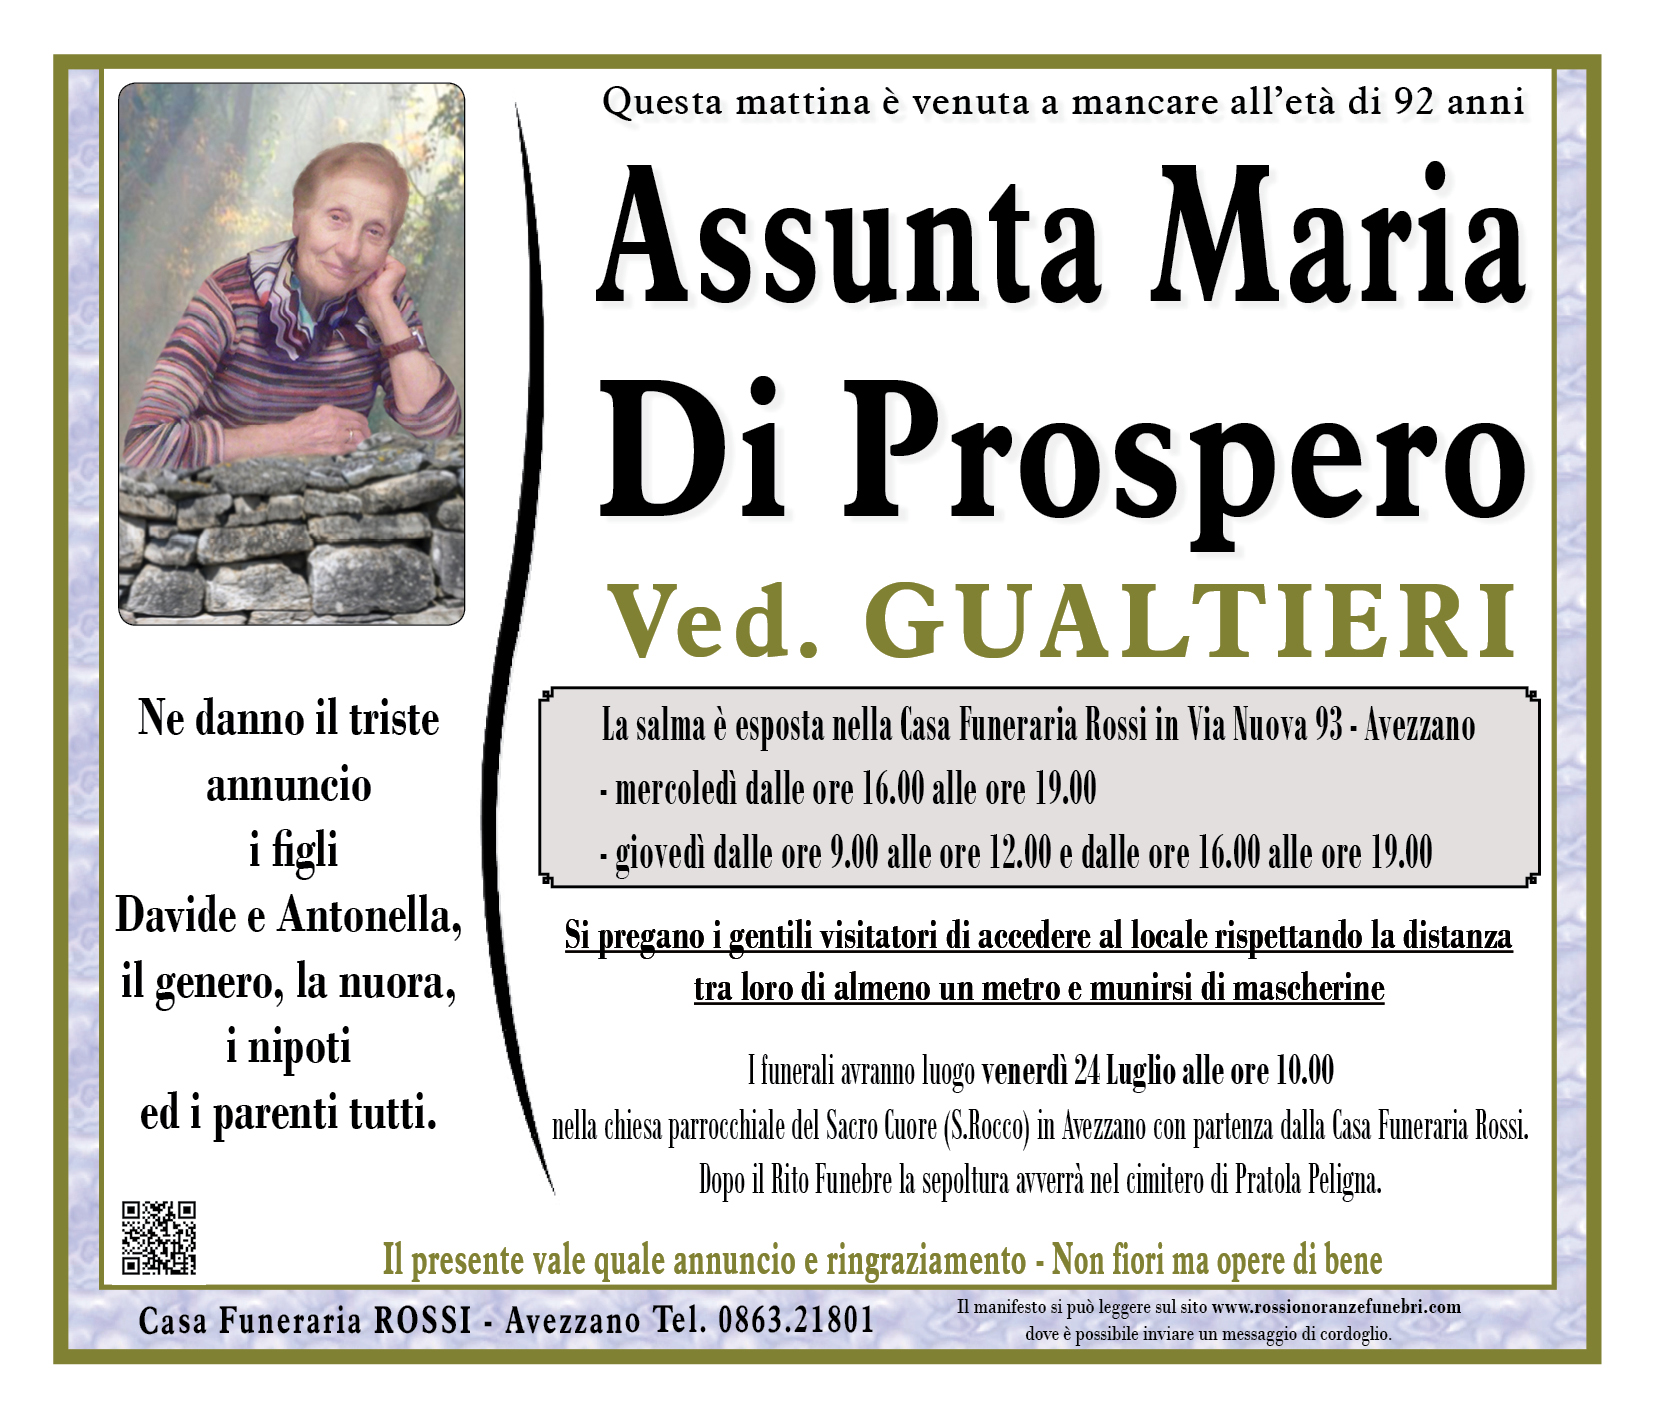 Assunta Maria Di Prospero